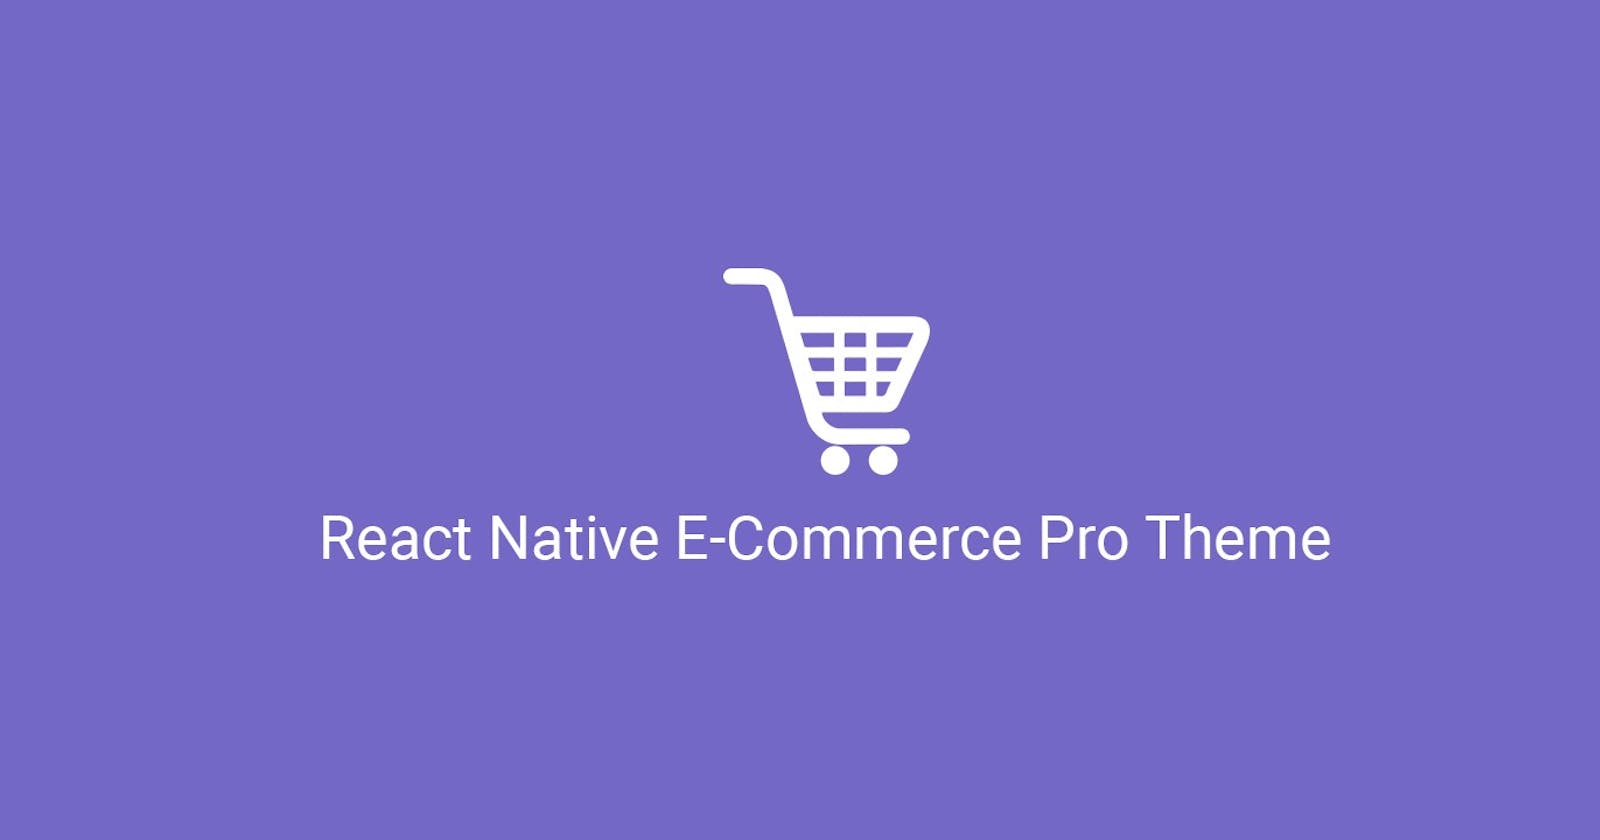 React Native E-Commerce Pro Theme - NativeBase.io Blog